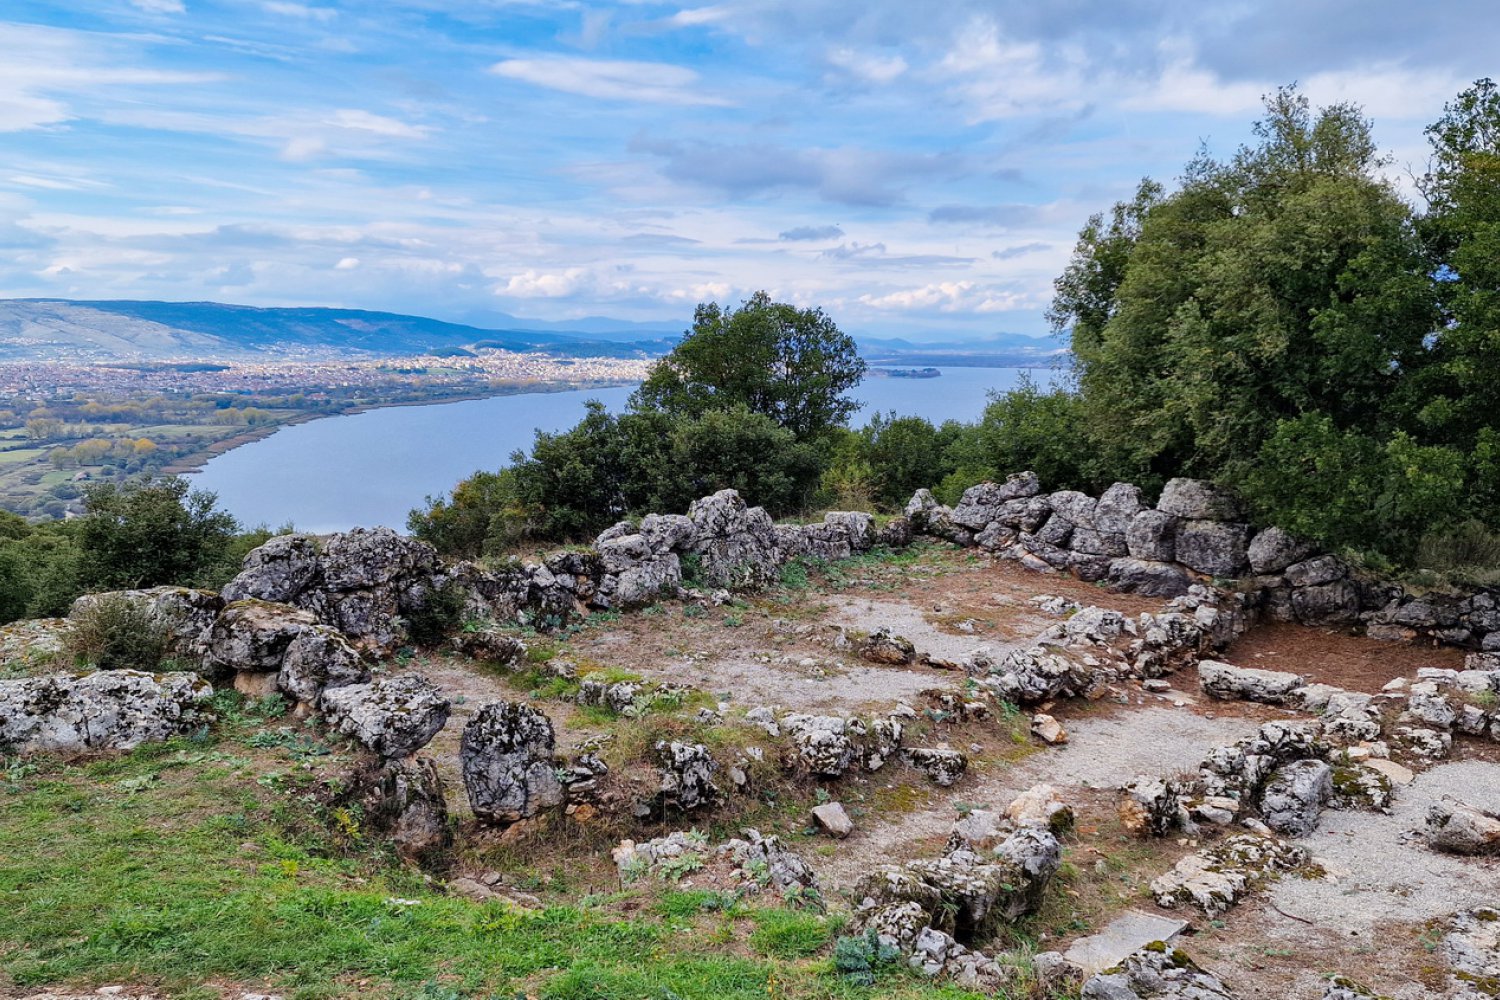 The Kastritsa archaeological site